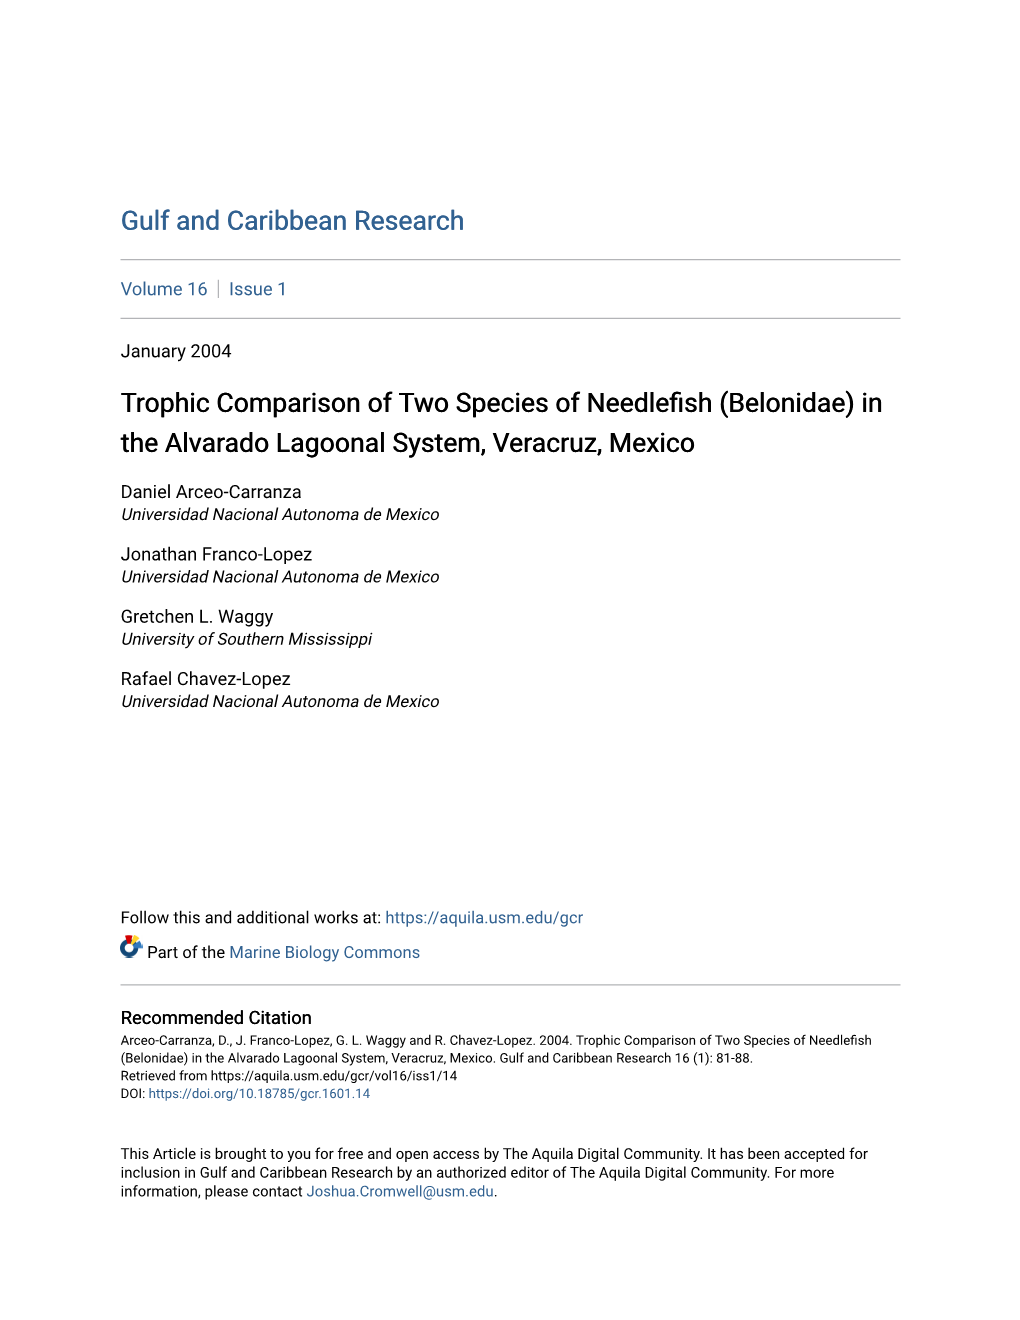 Trophic Comparison of Two Species of Needlefish (Belonidae) in the Alvarado Lagoonal System, Veracruz, Mexico